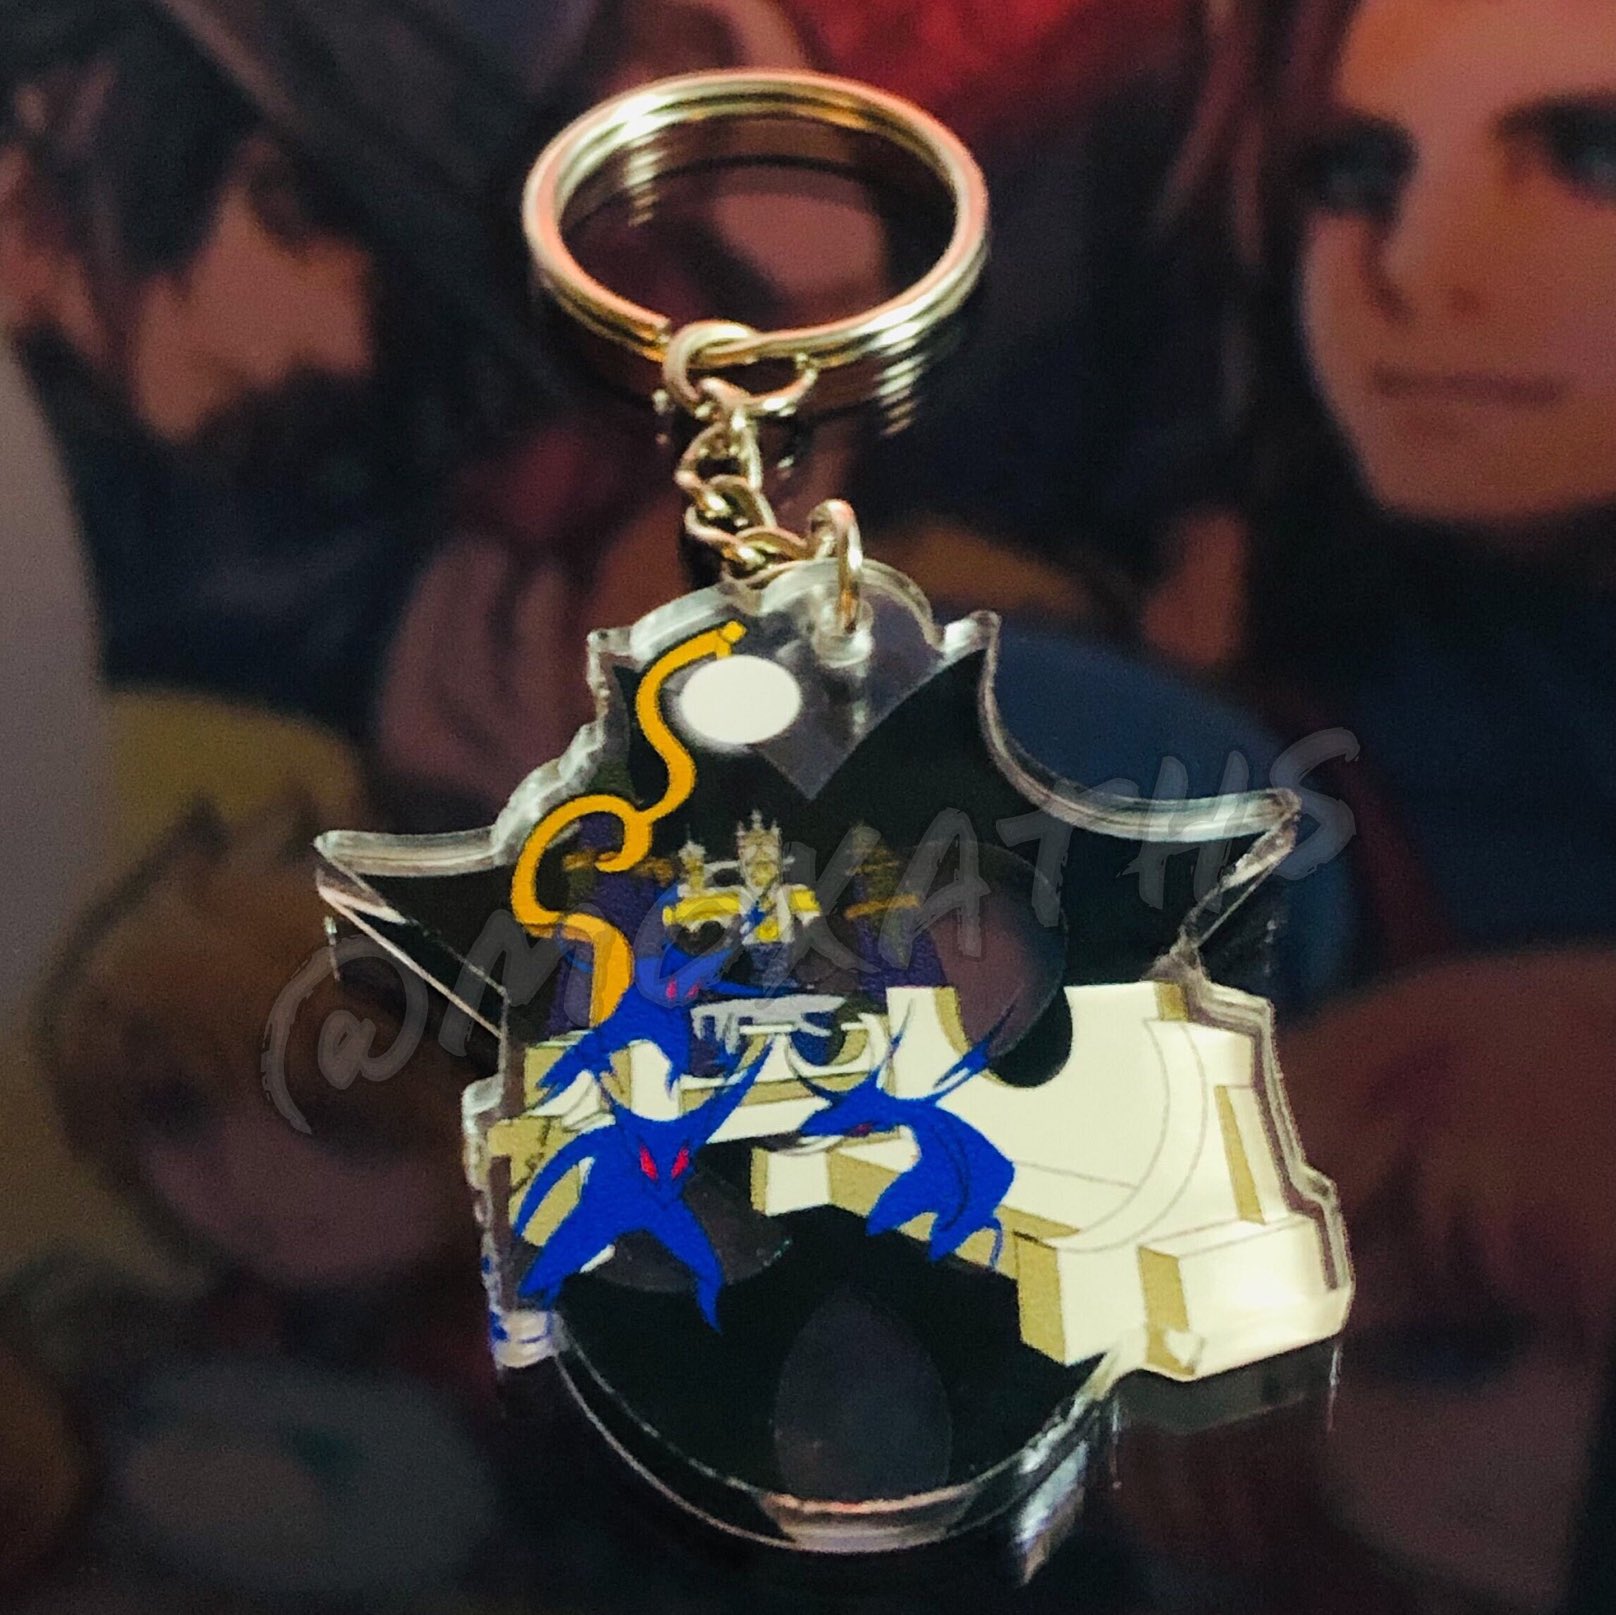 Kingdom Hearts Missing-link streets at Night Keychain 